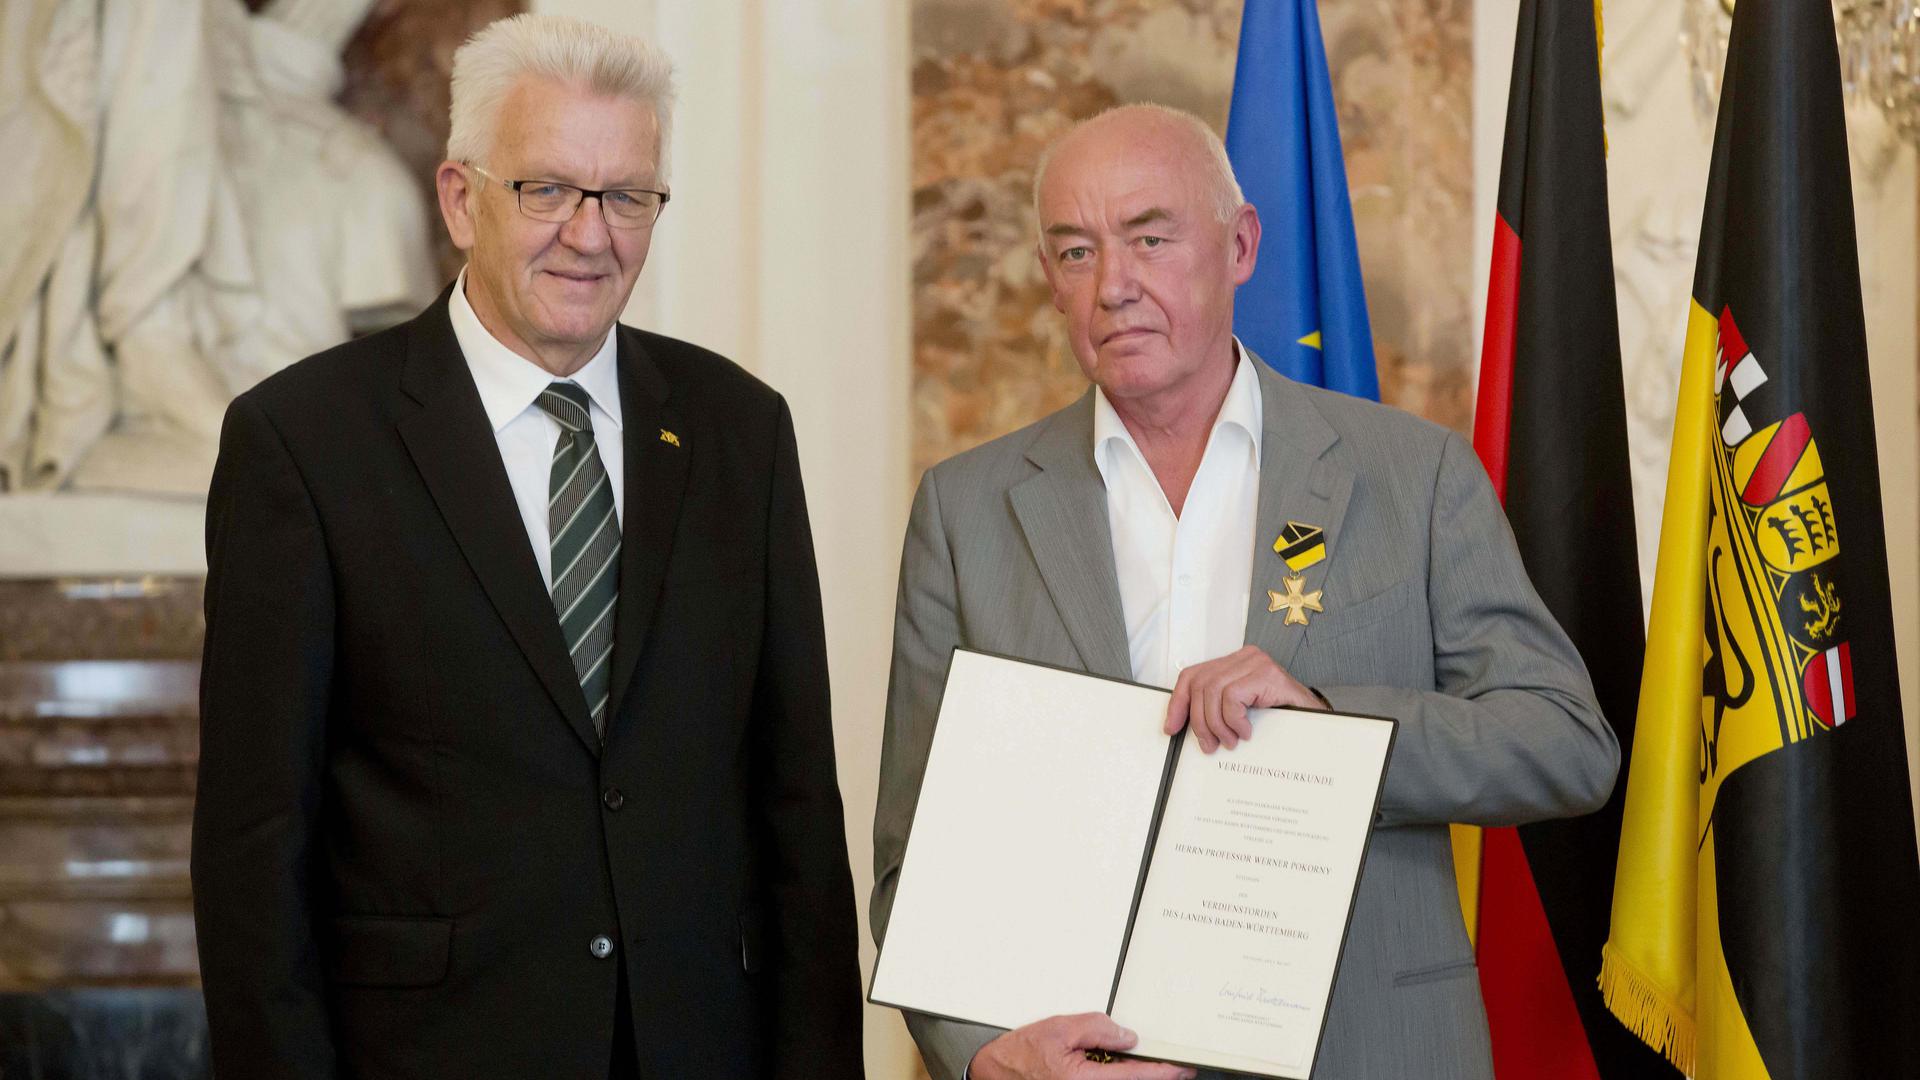 Verleihung des Verdienstordens des Landes Baden-Württemberg